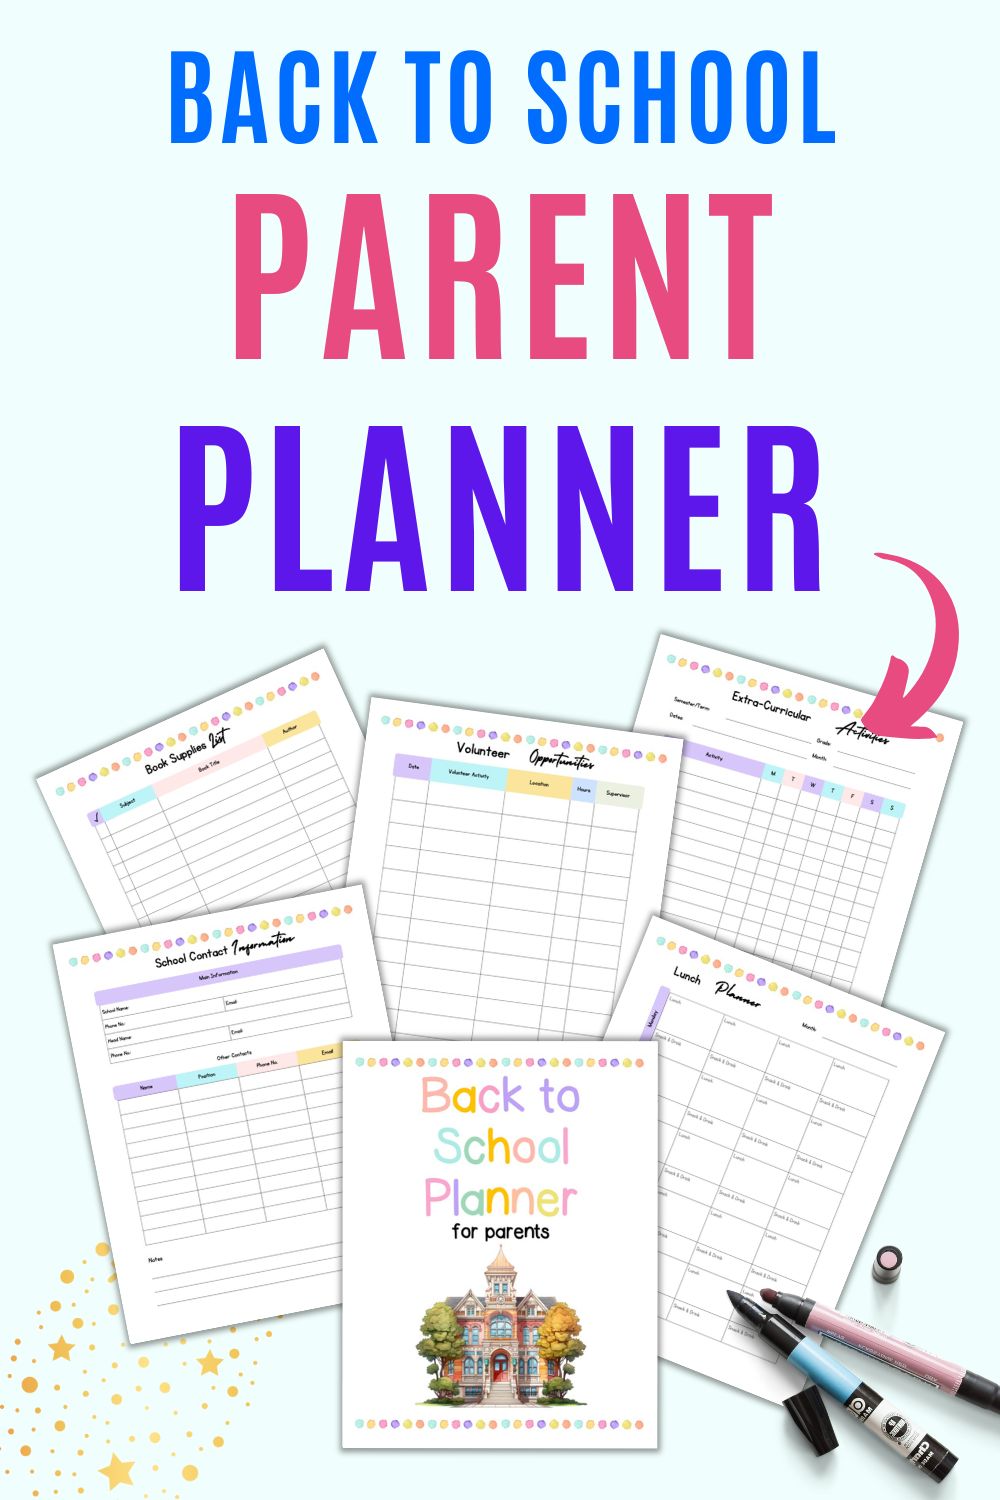 Back to School Parent Planner